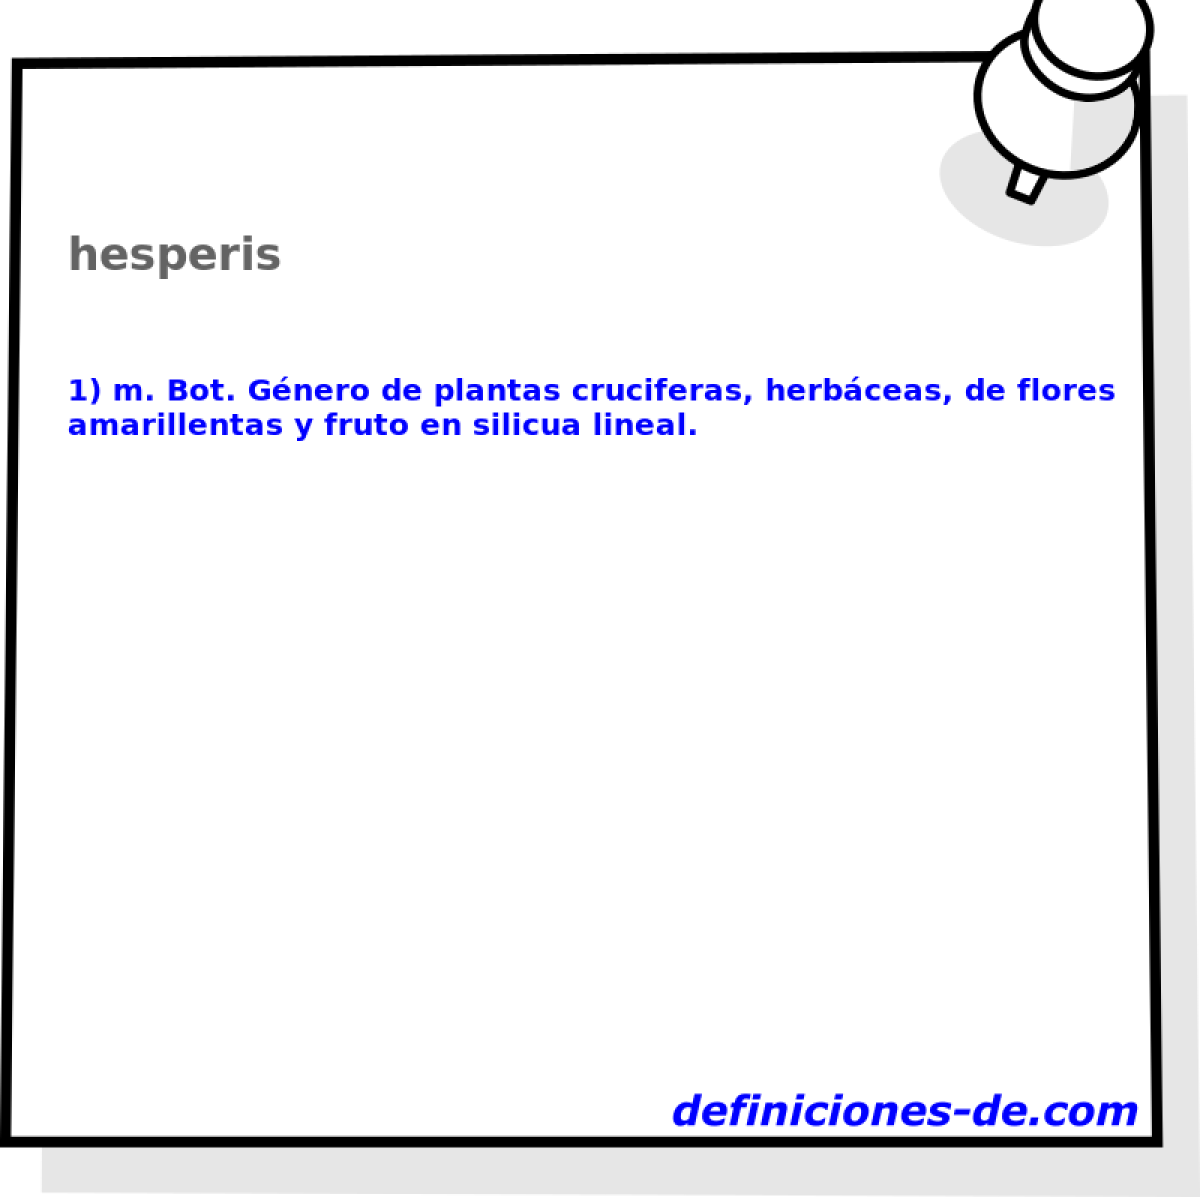 hesperis 